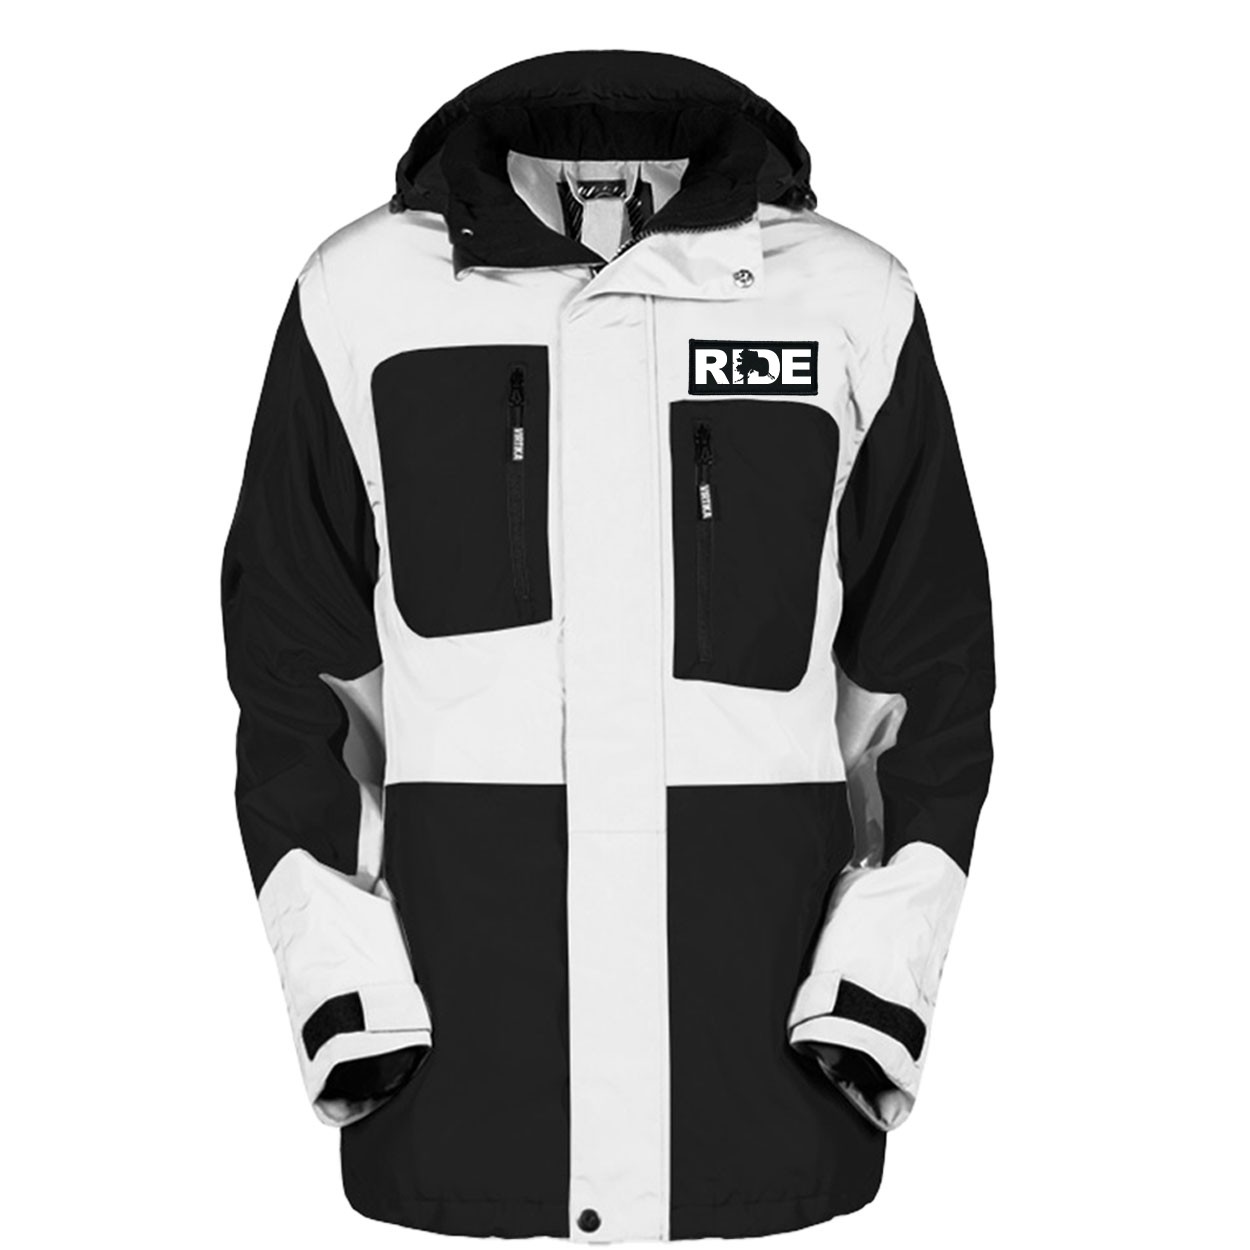 Ride Alaska Classic Woven Patch Pro Snowboard Jacket (Black/White)